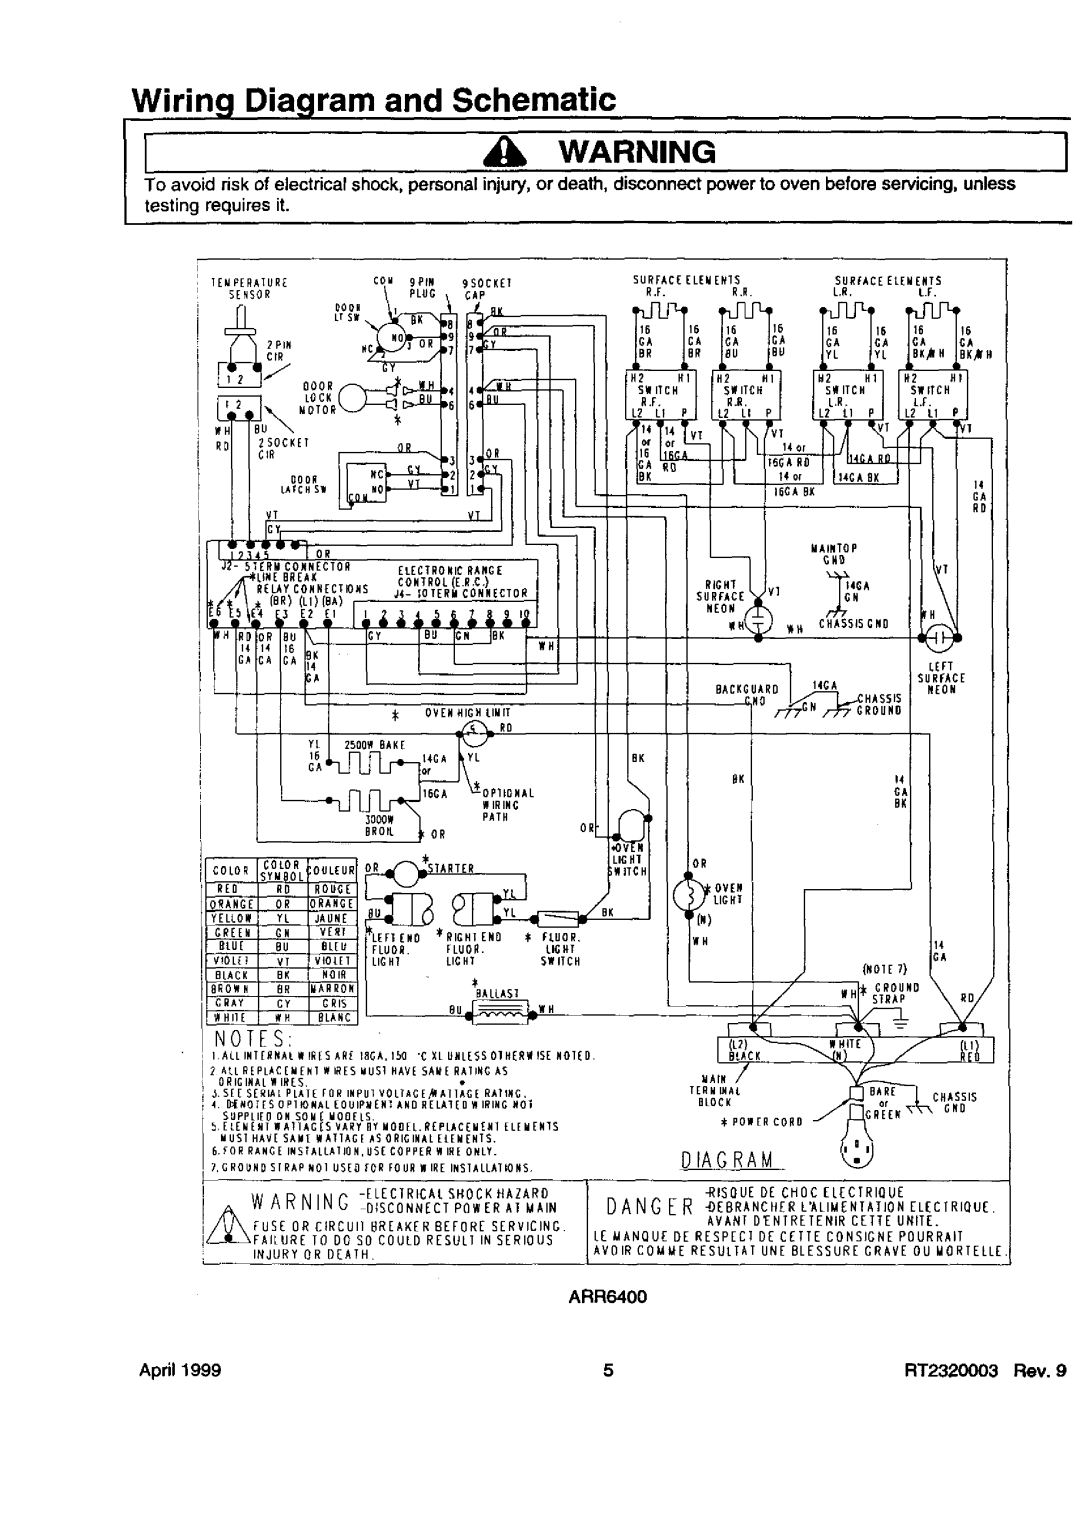 Amana P1143460N Wiring Diagram and Schematic, Notes, Bleu_Ufluor, Tg,K, Danger _Ebrancherlalimeniationelectrique, Oranc_O_ 